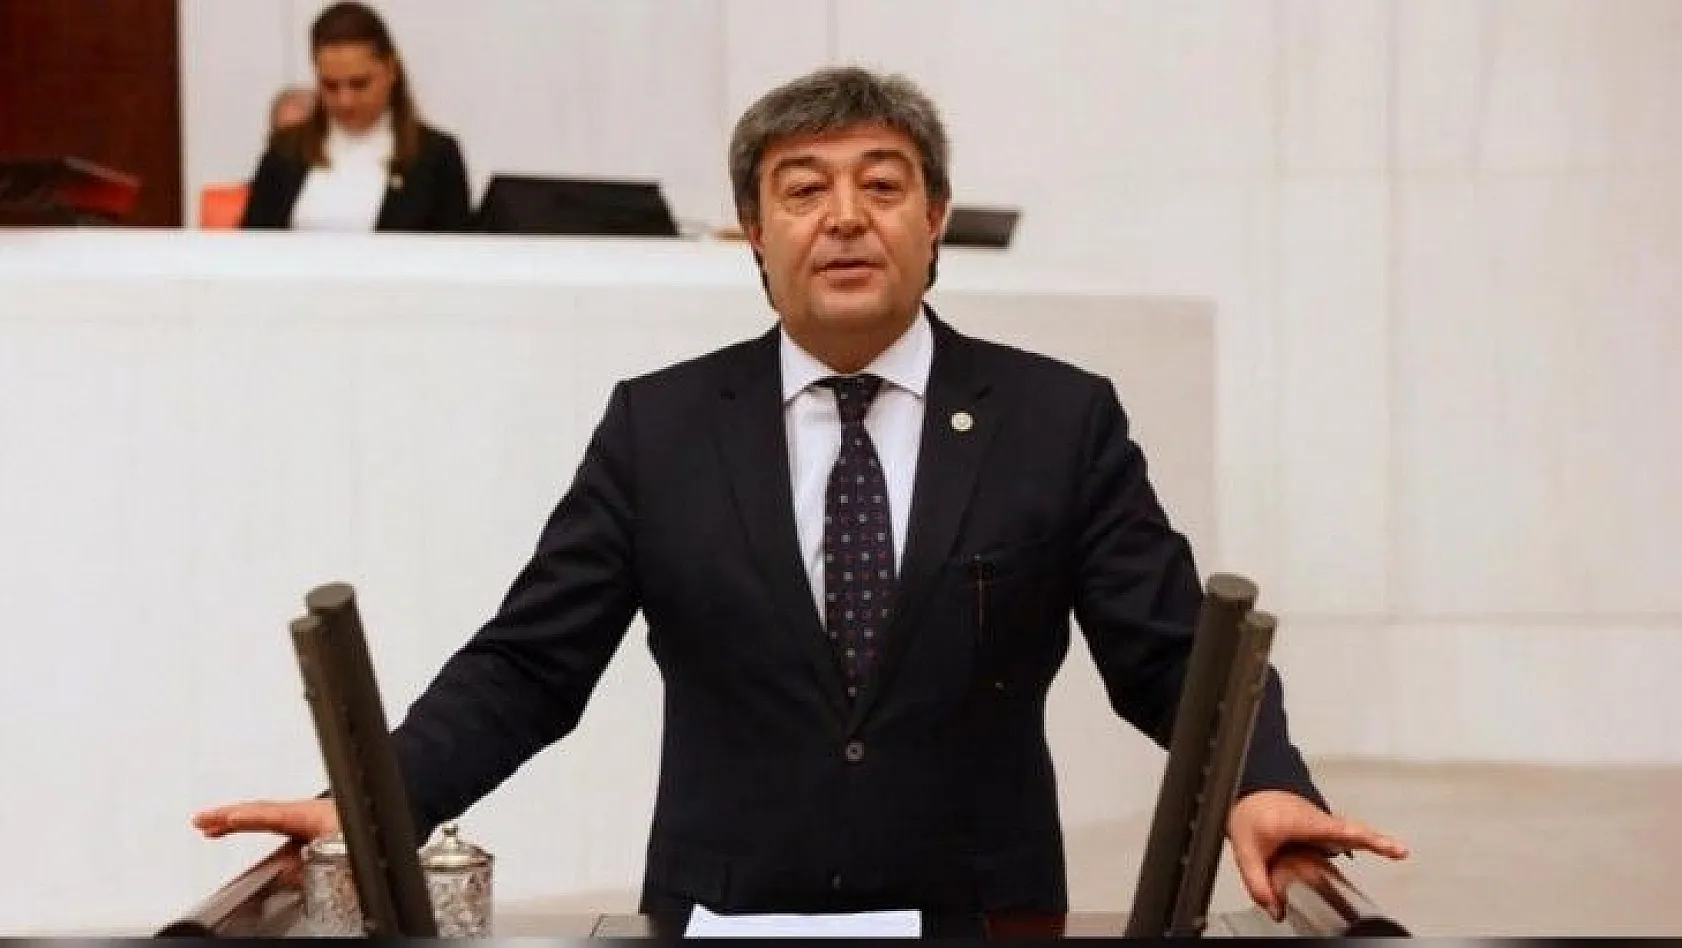 Milletvekili Ataş: Kayseri'de Suriyeli problemi giderek artıyor! Vatandaş huzursuz...